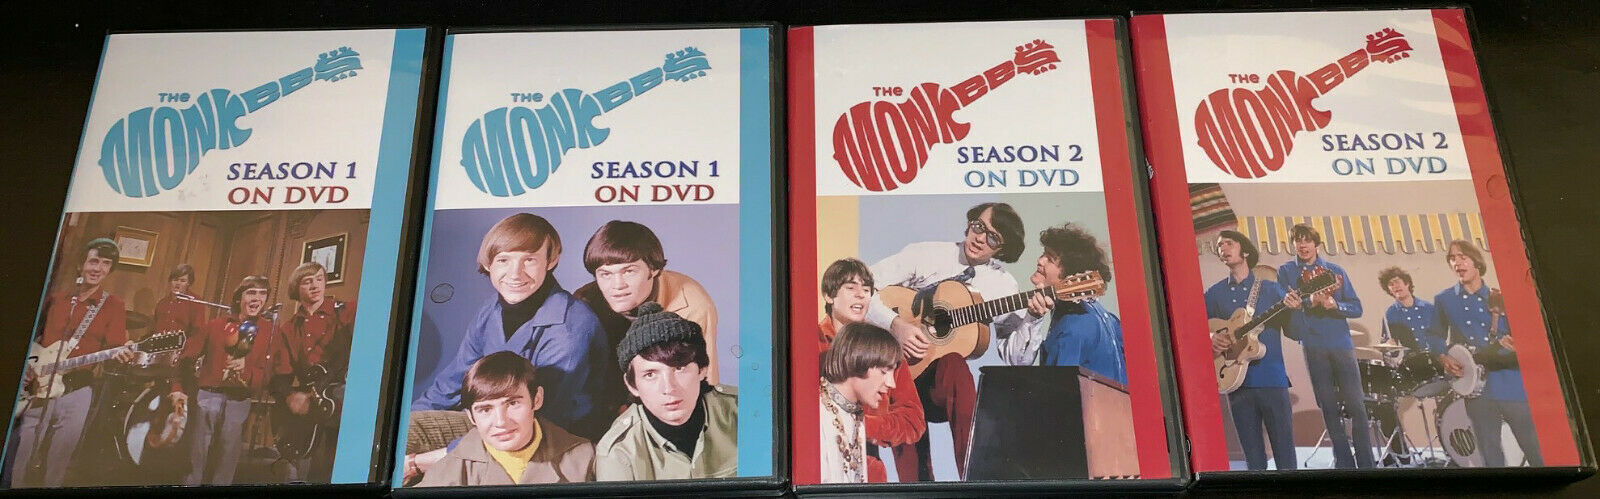 The Monkees Season 1 & 2 8-Disc DVD Set